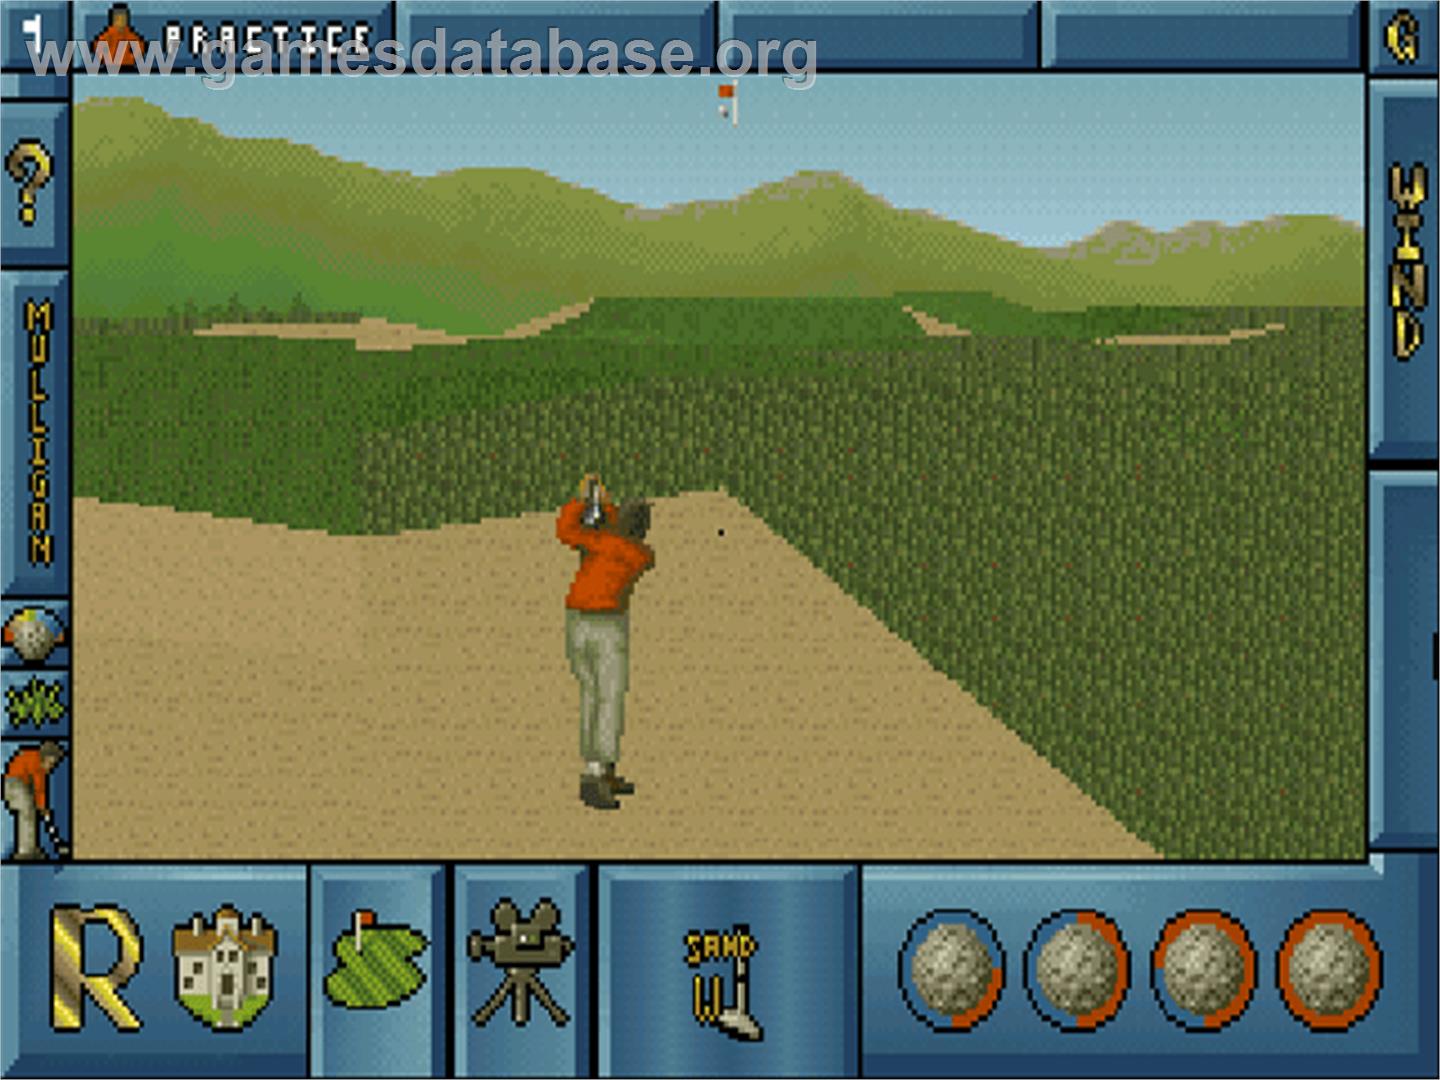 International Open Golf Championship - Commodore Amiga CD32 - Artwork - In Game